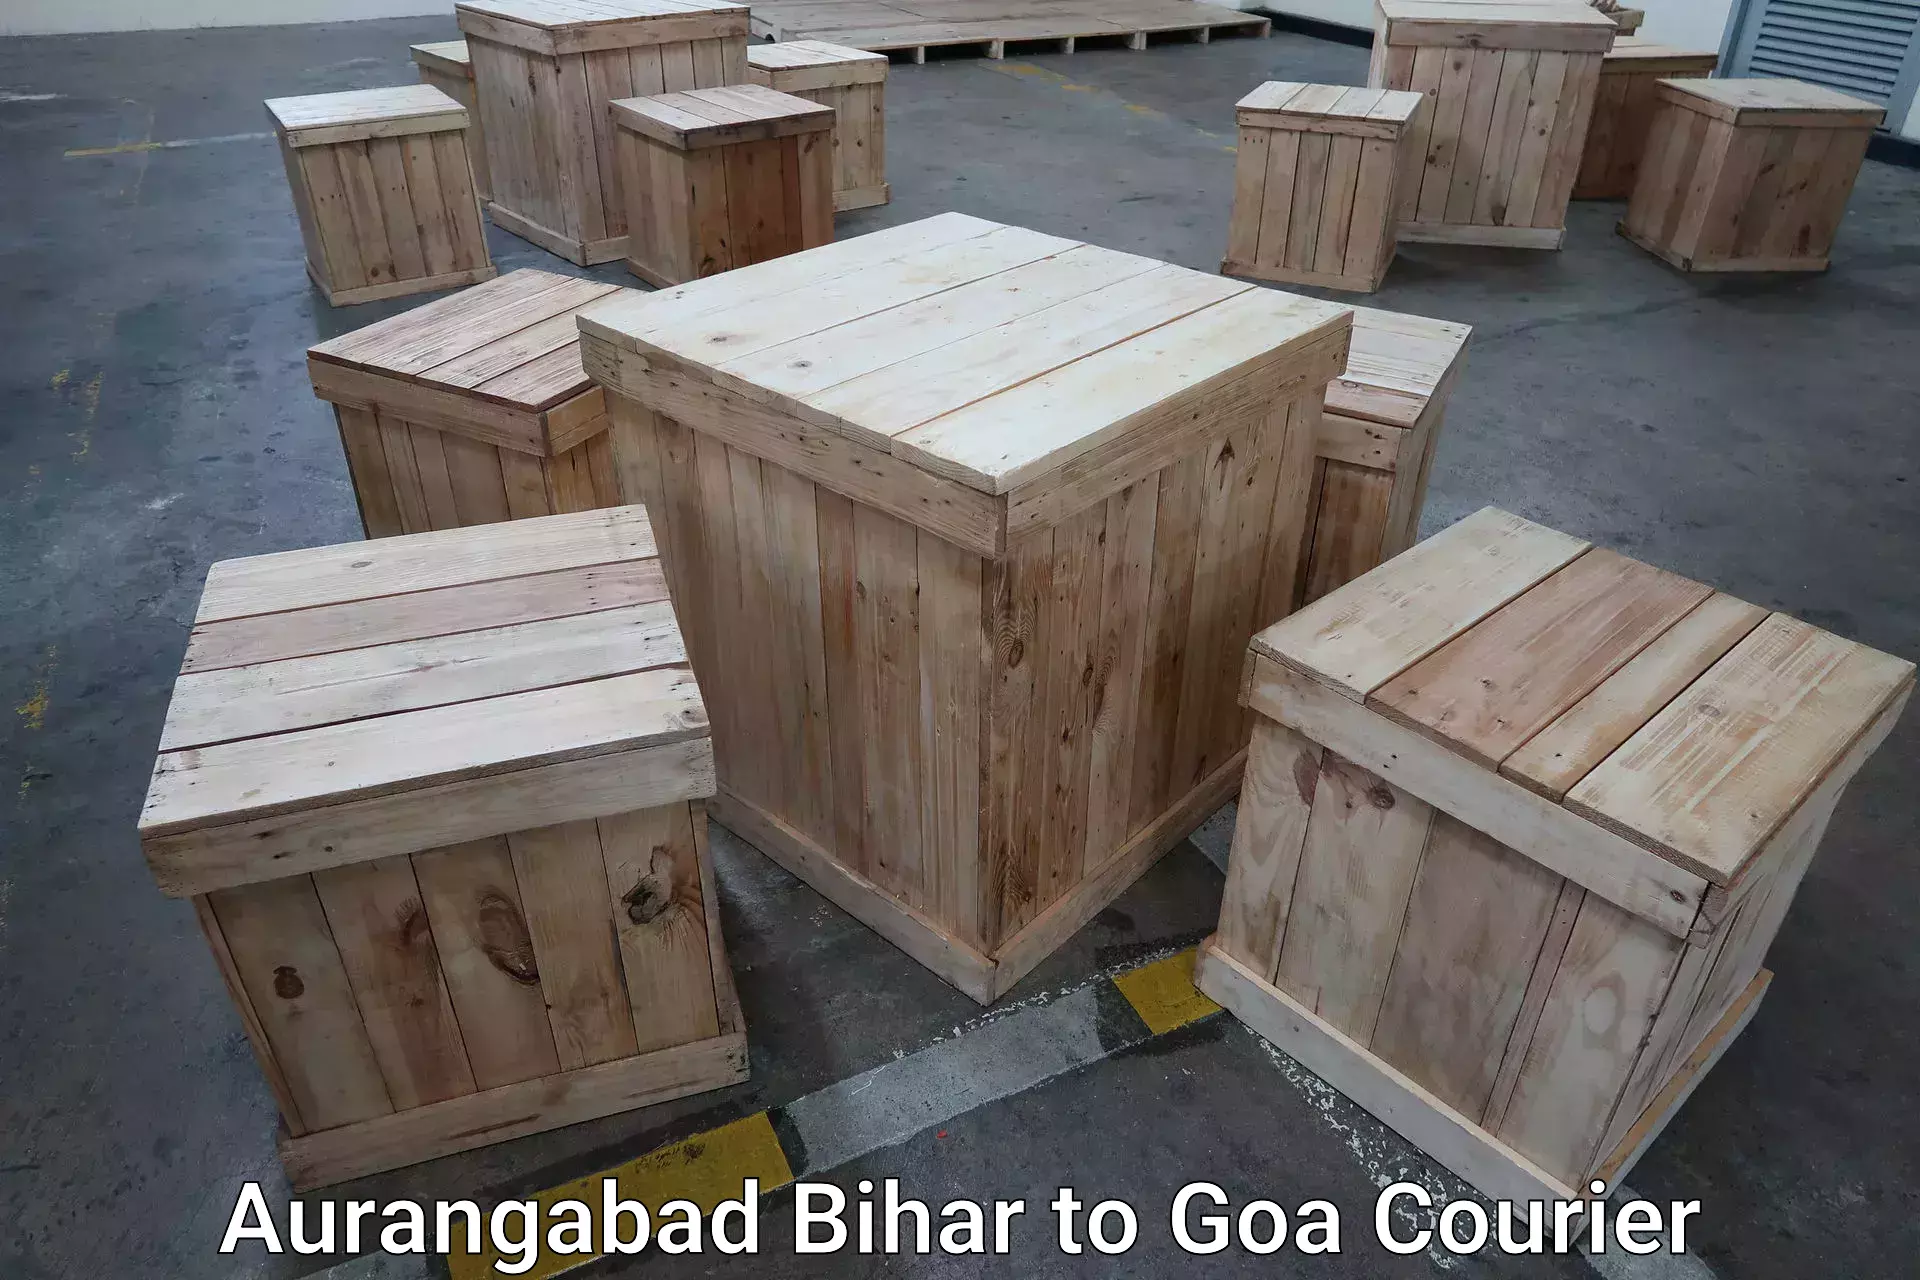 Baggage transport technology Aurangabad Bihar to Goa